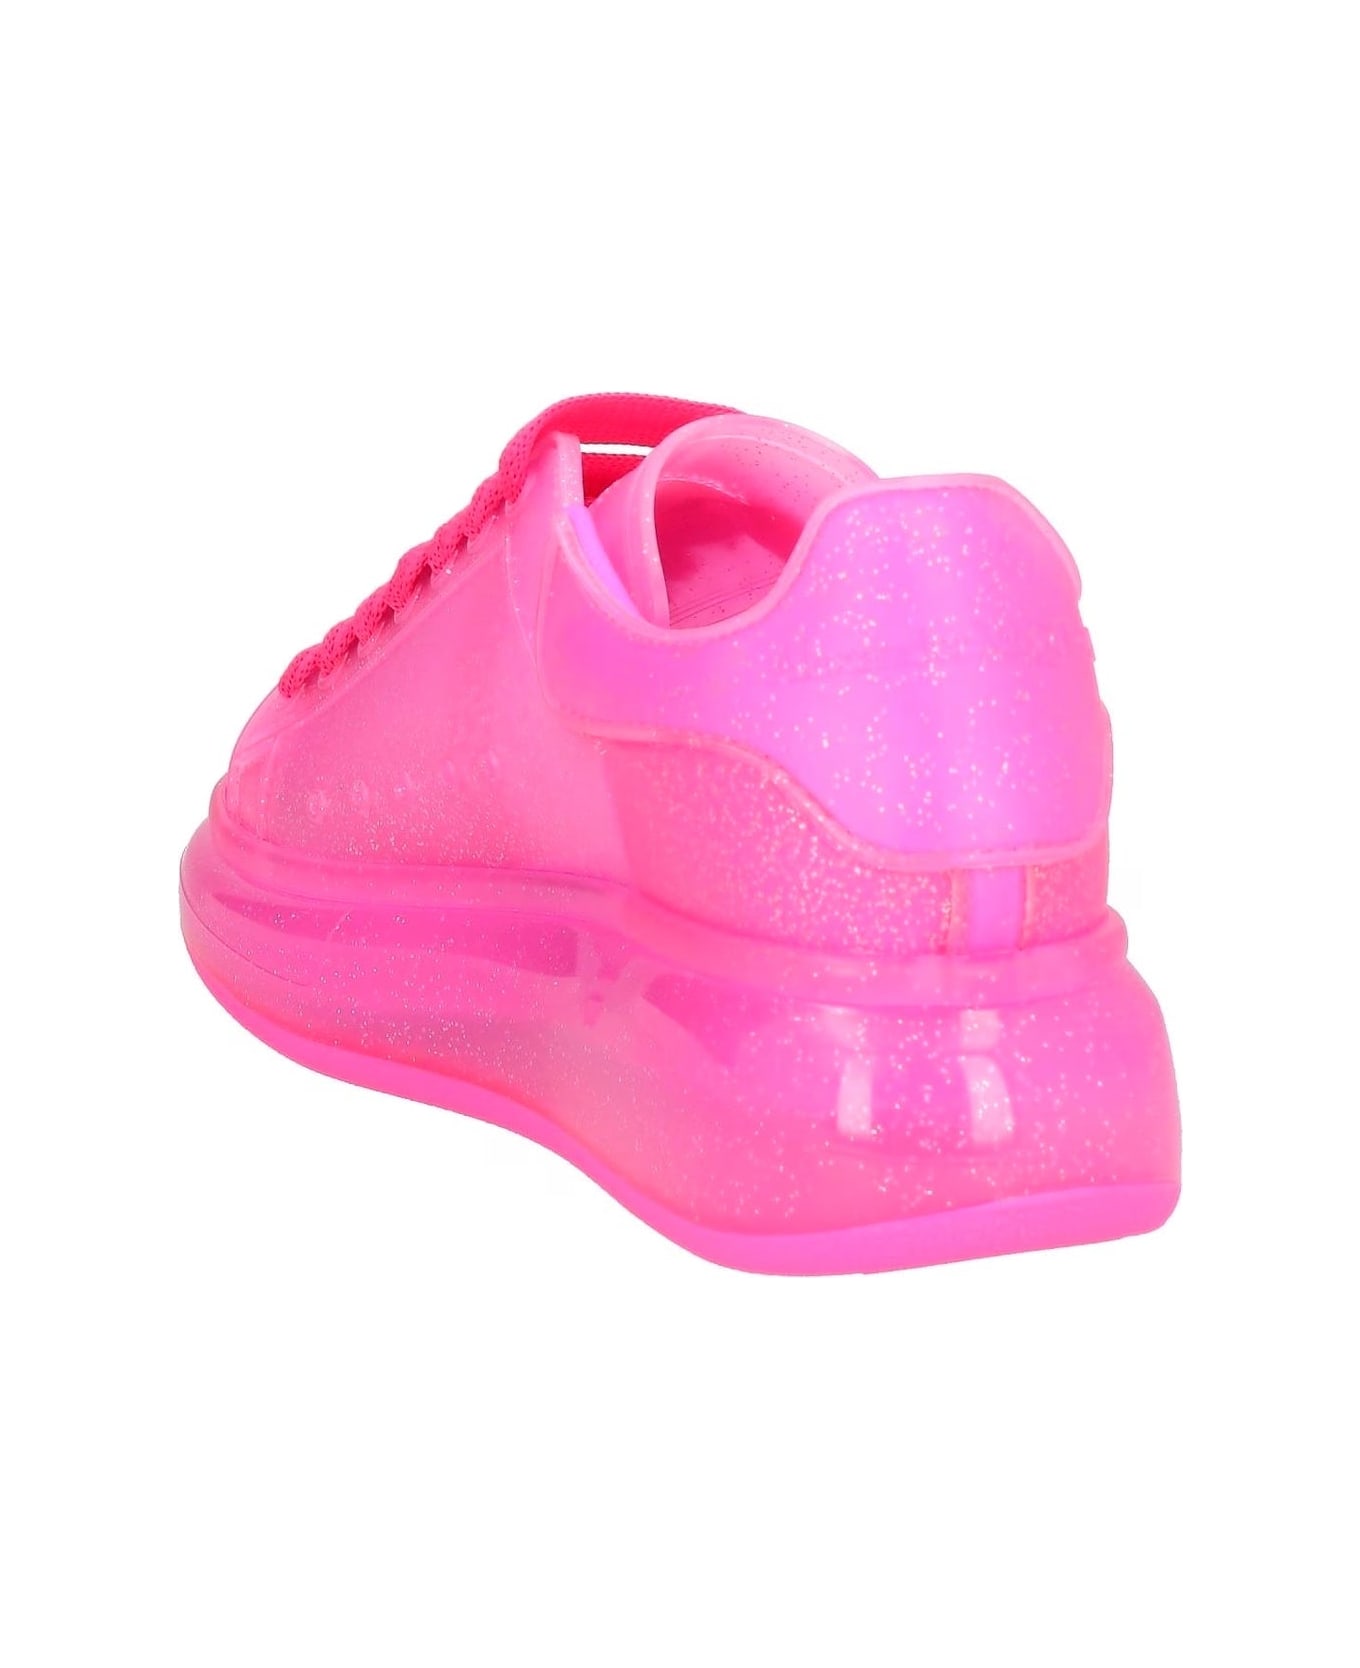 Alexander McQueen Oversized Glitter Sneakers - Pink スニーカー